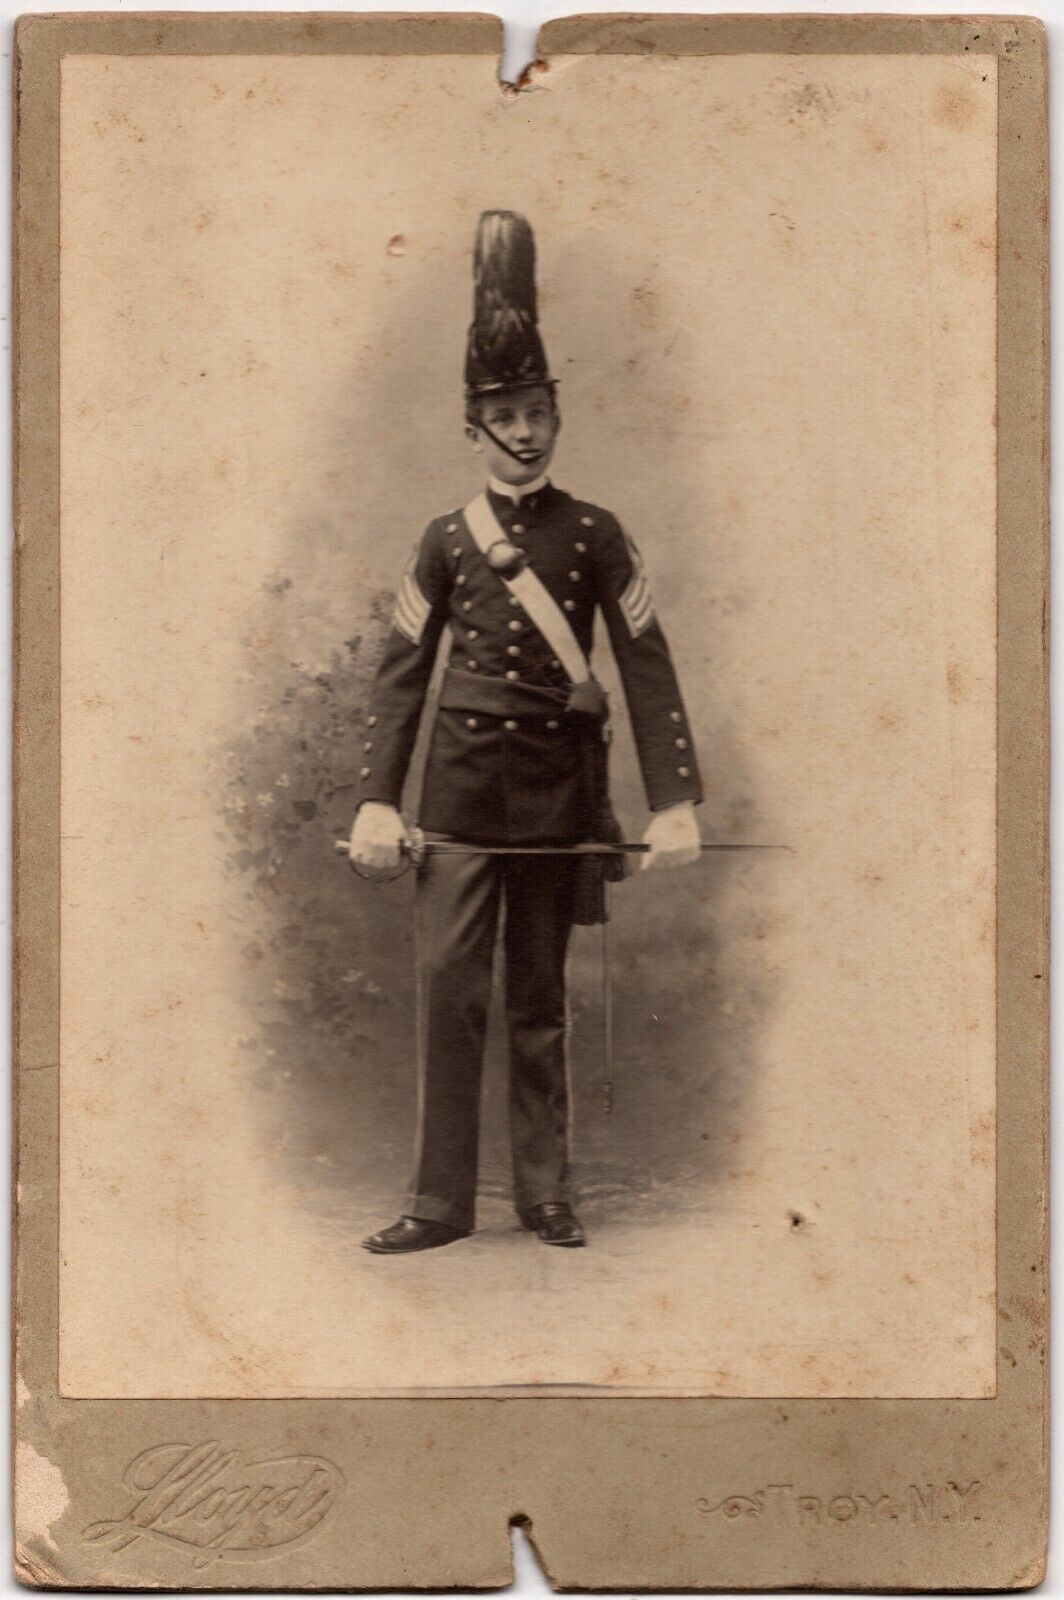 CIRCA 1890s CABINET CARD LLOYD CAPT. H. L. COONE WW1 SOLDIER TROY NEW YORK